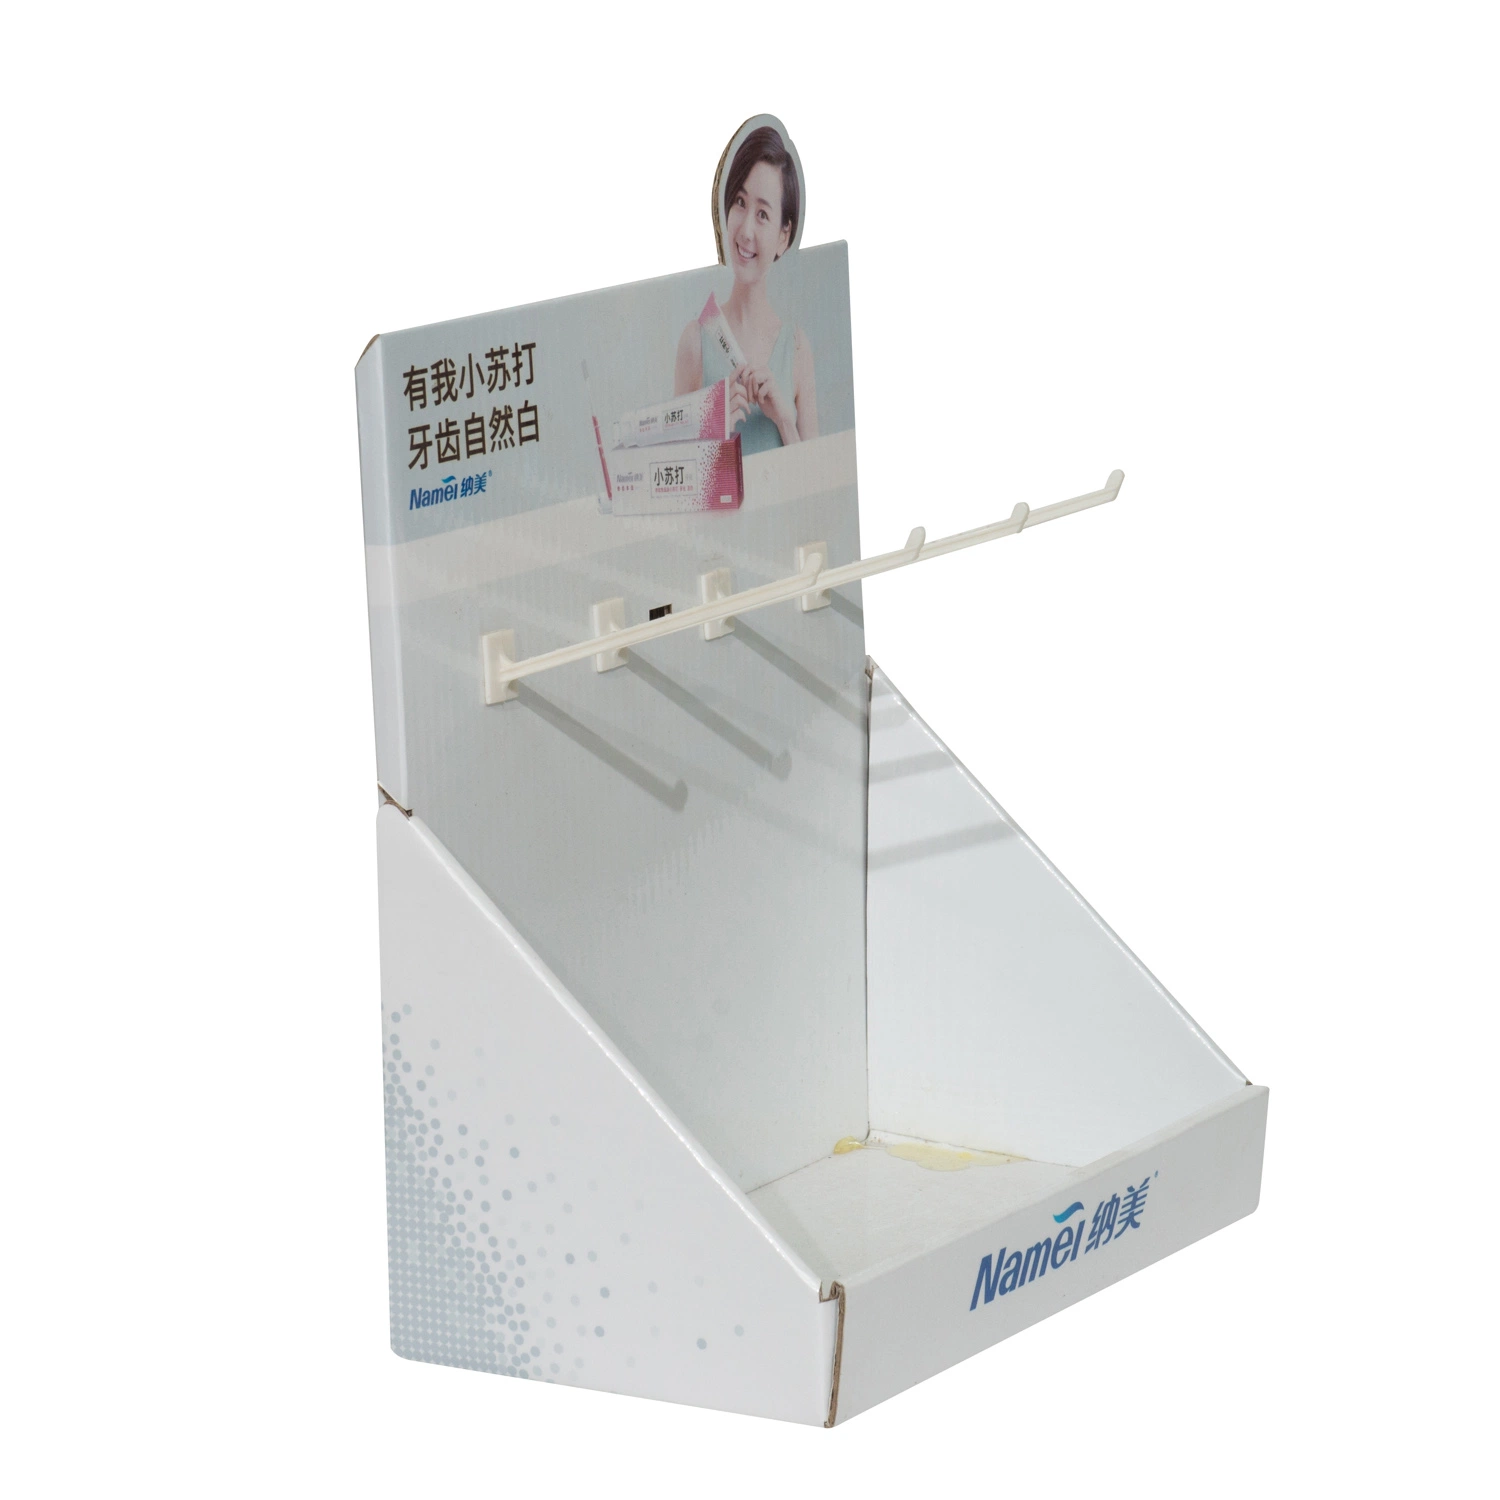 Toothbrush PDQ Paper Box Retail Show Box Cardboard Box Display with Hooks